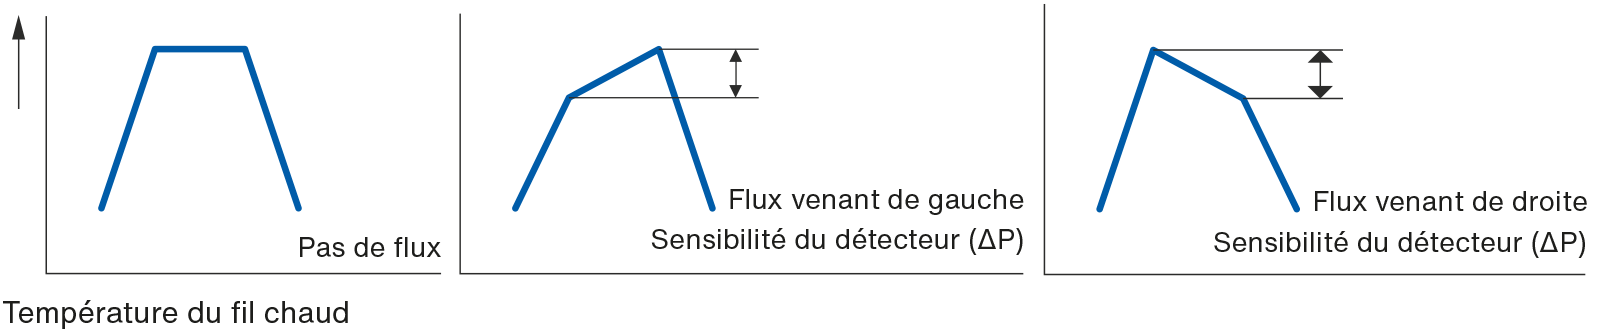 caracteristiques des analyseurs extractifs de gaz infrarouge ndir schema 